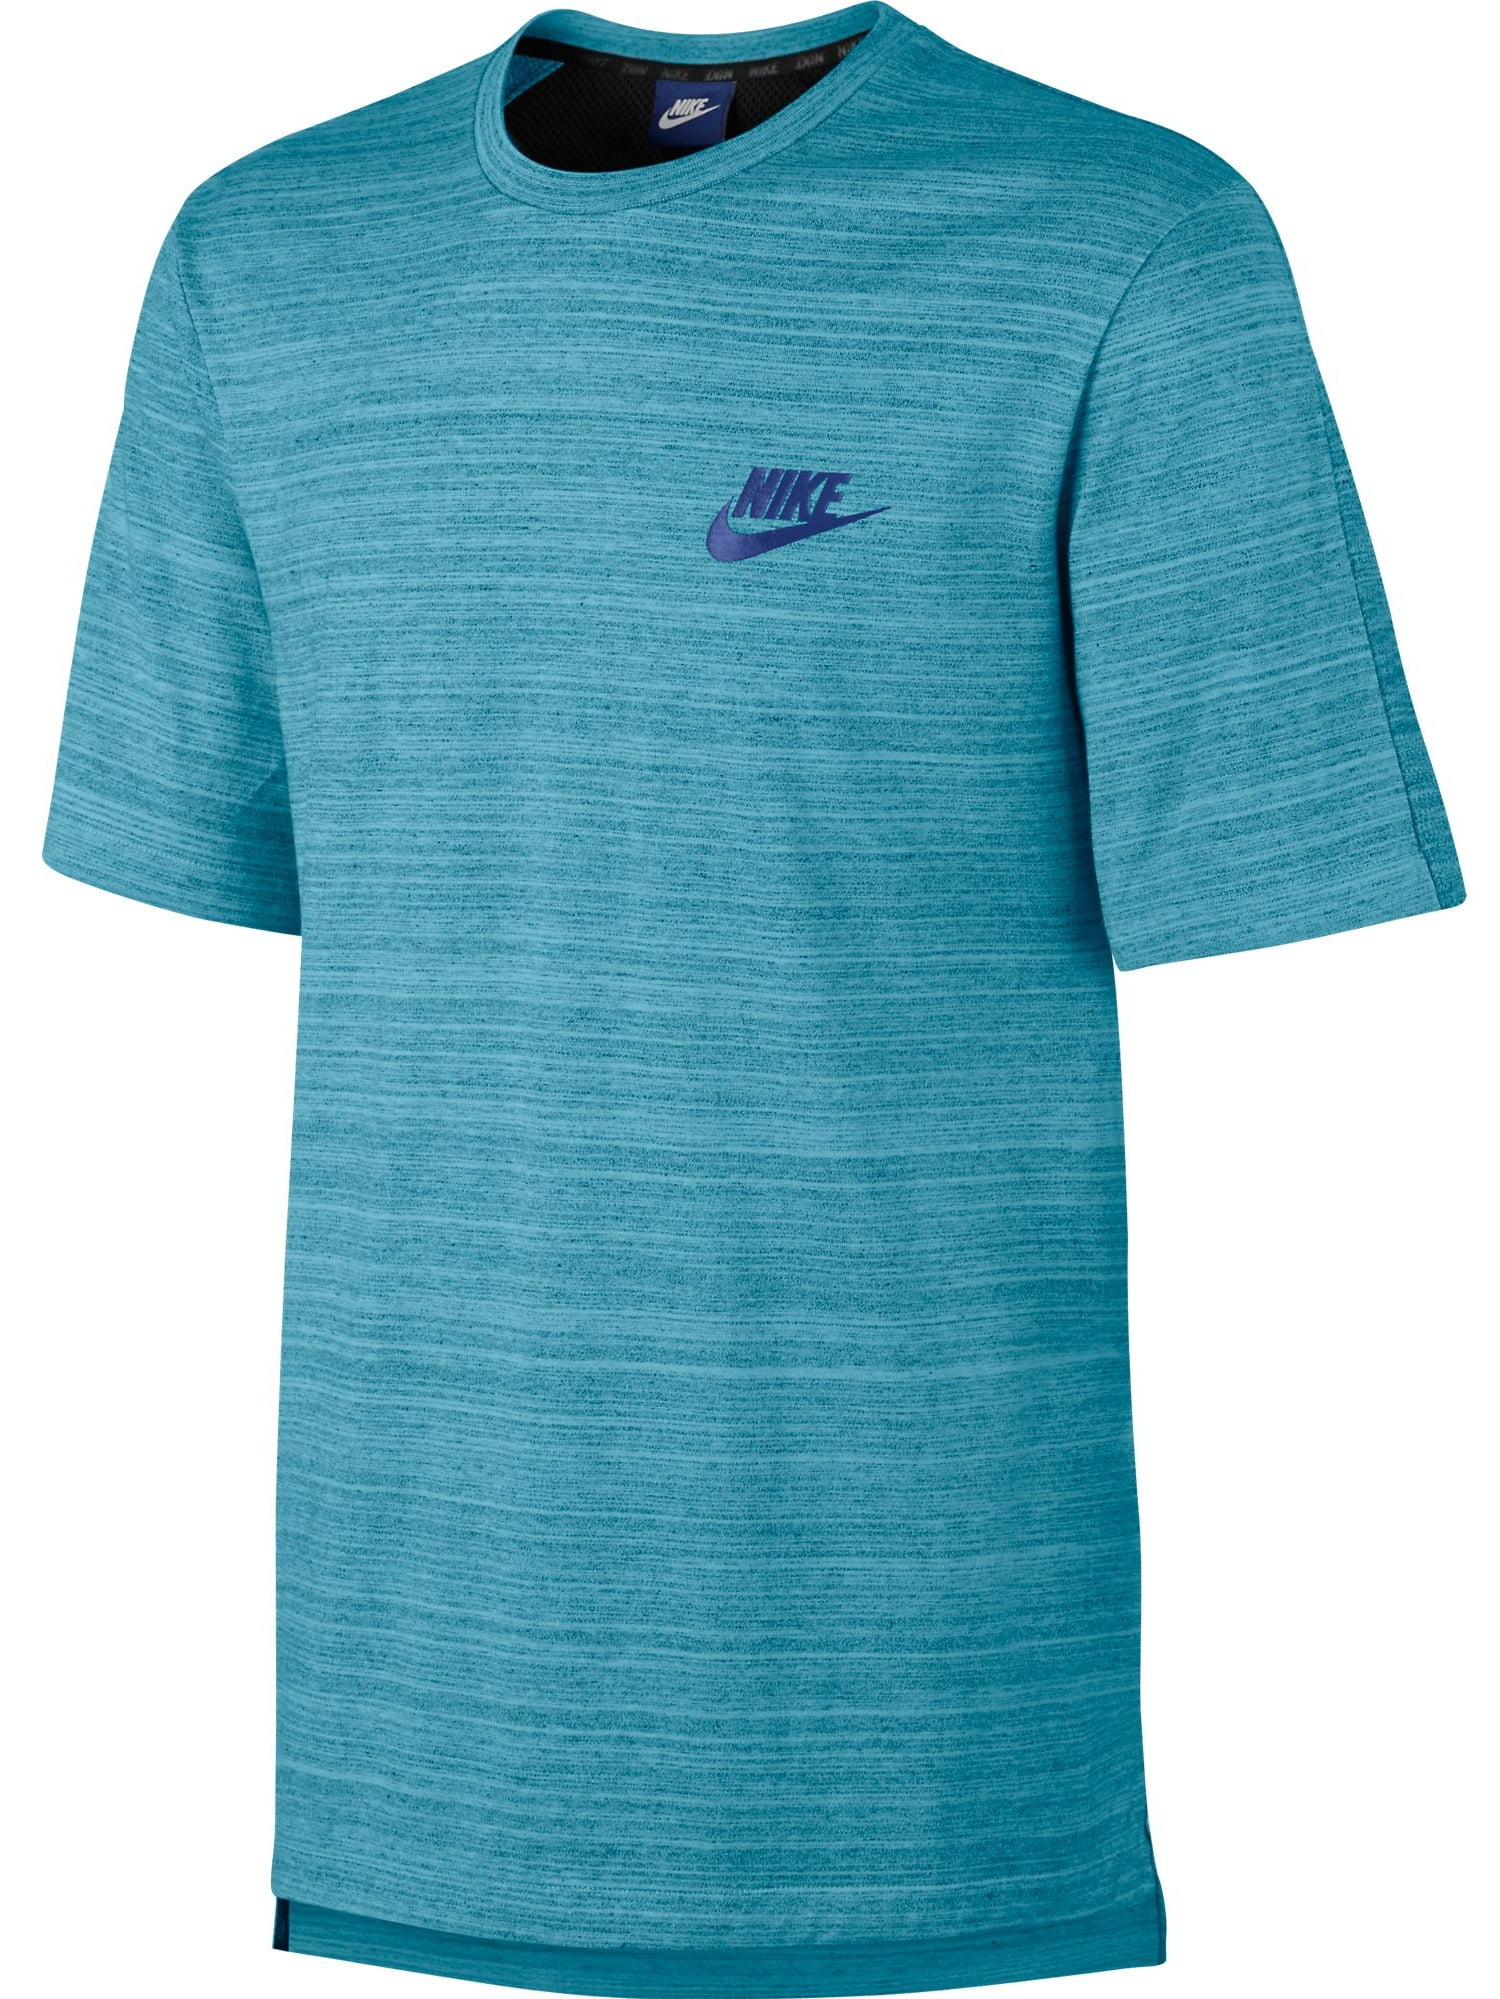 Nike Sportswear Advance 15 Men's T-Shirt Blue 837010-432 - Walmart.com